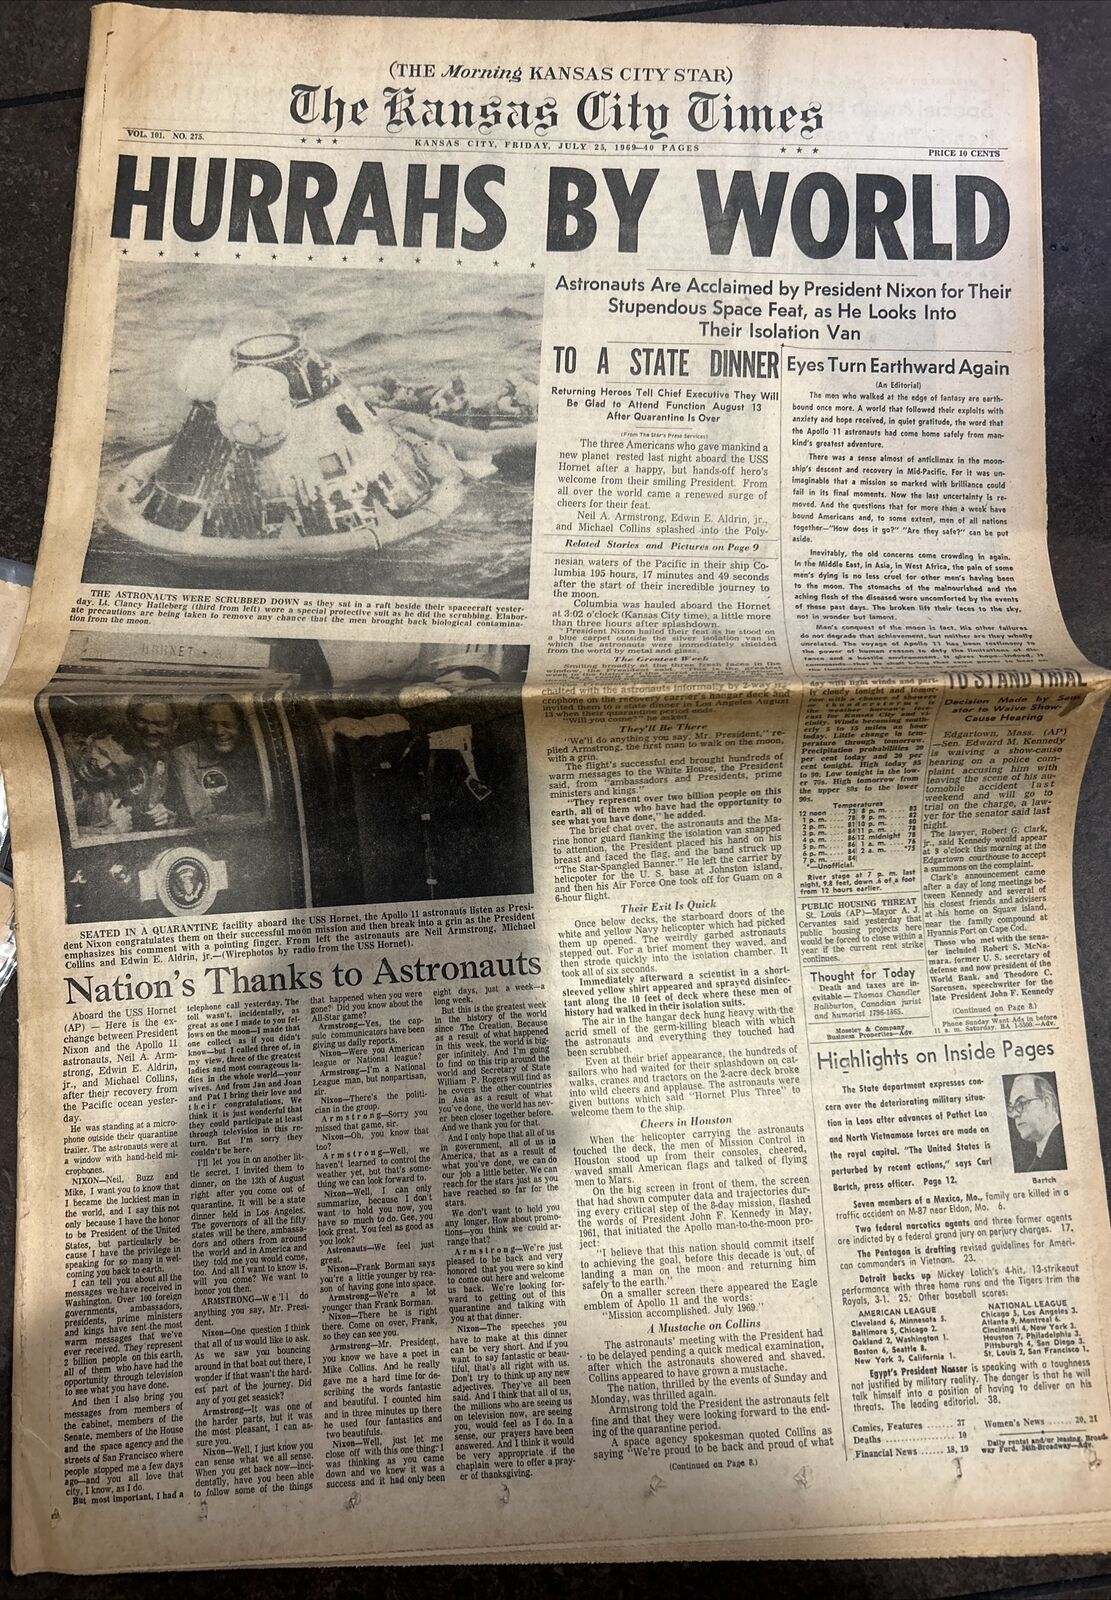 July 25, 1969 Kansas City Times  - Newspaper Hurrahs By World  - Moonwalk - News